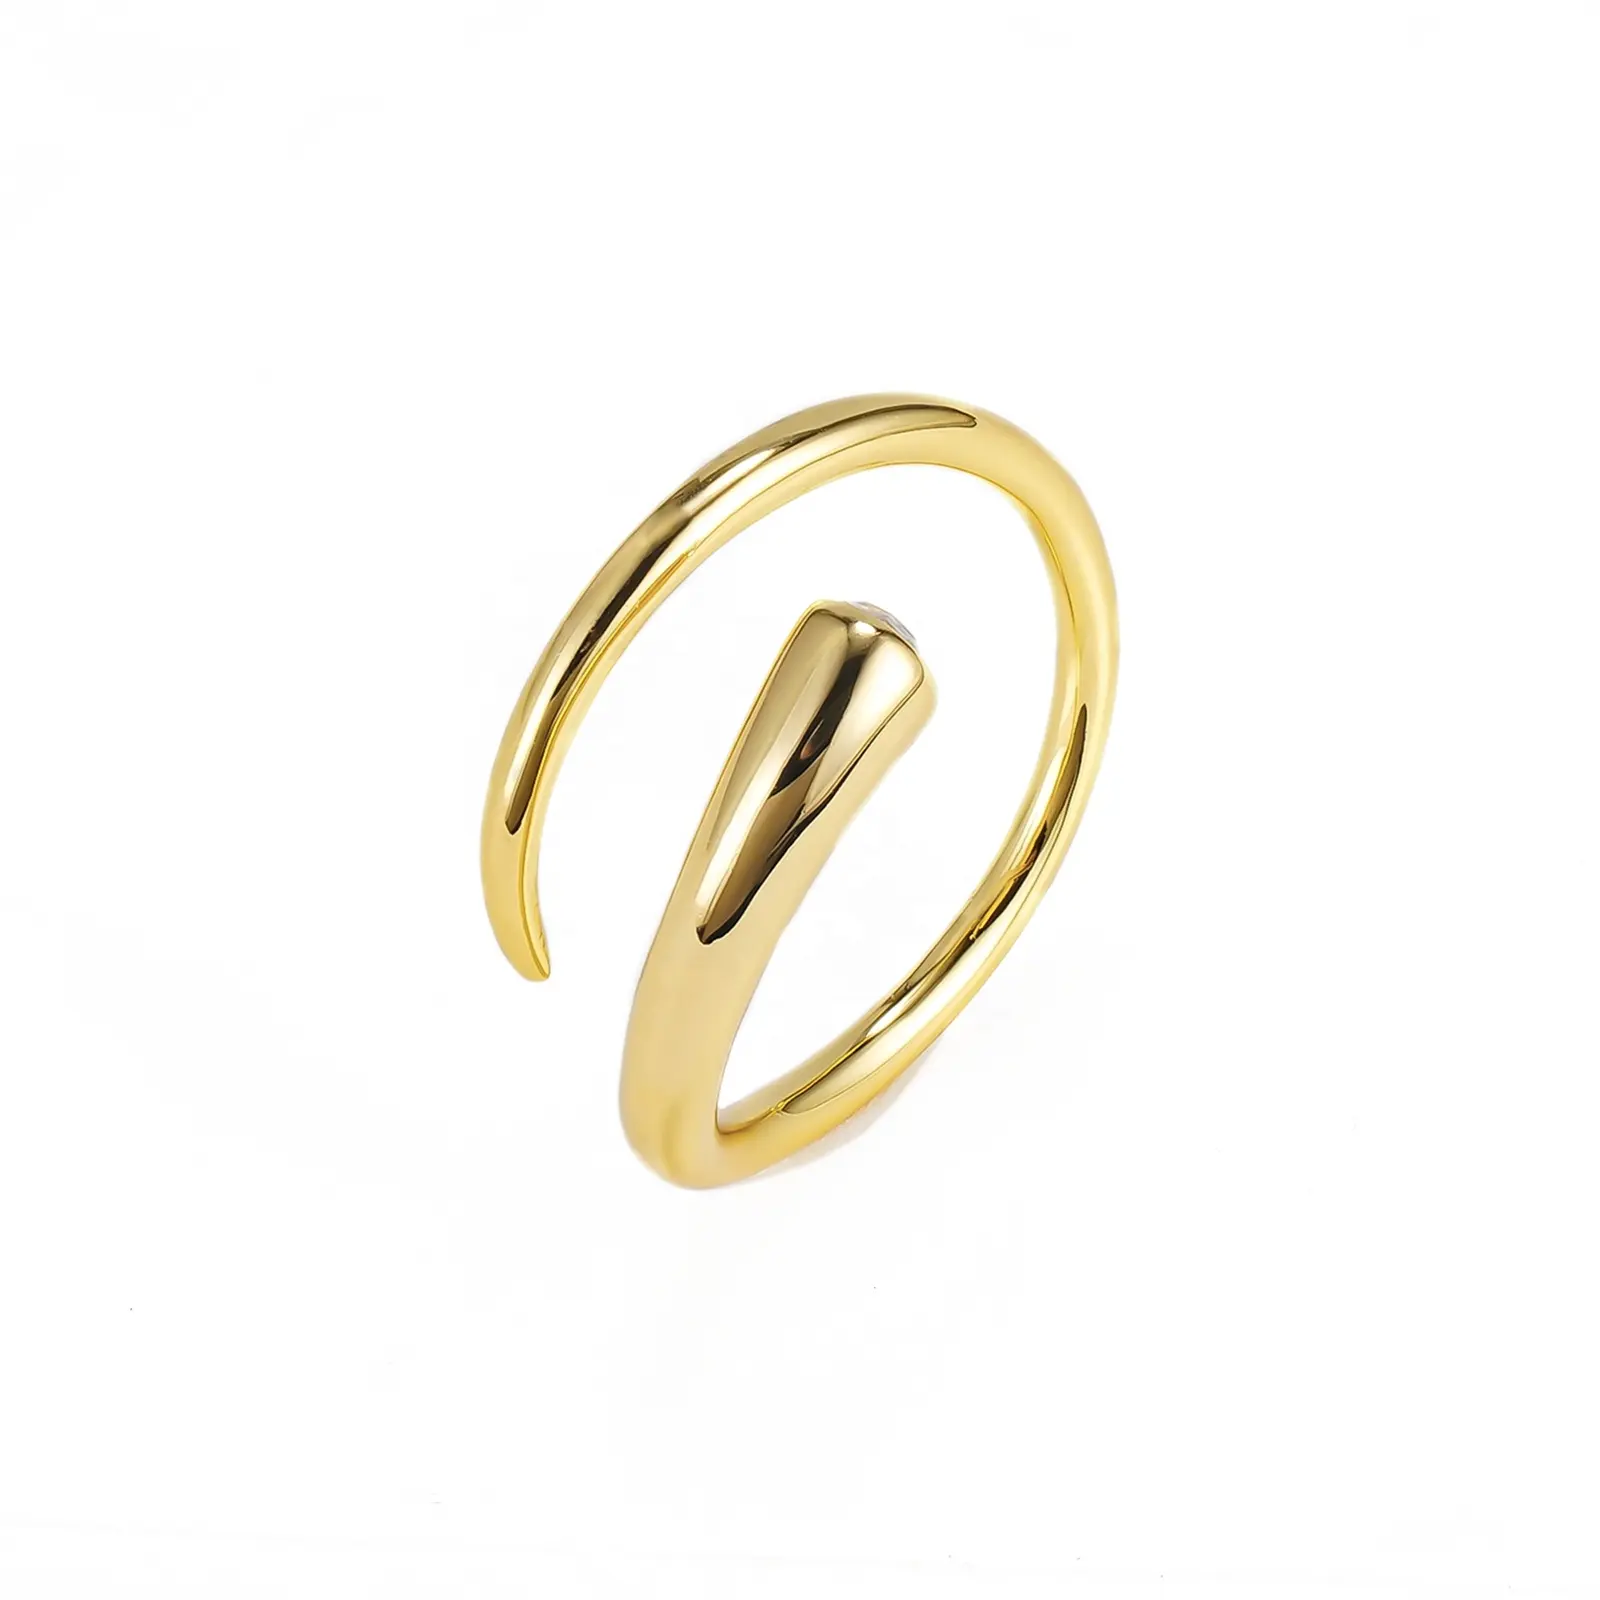 Wholesale Custom Creative Design Ring Brass Fashion Jewelry Cute Winding Shape 18K Gold Plated Zircon Adjustable Open Ring Women